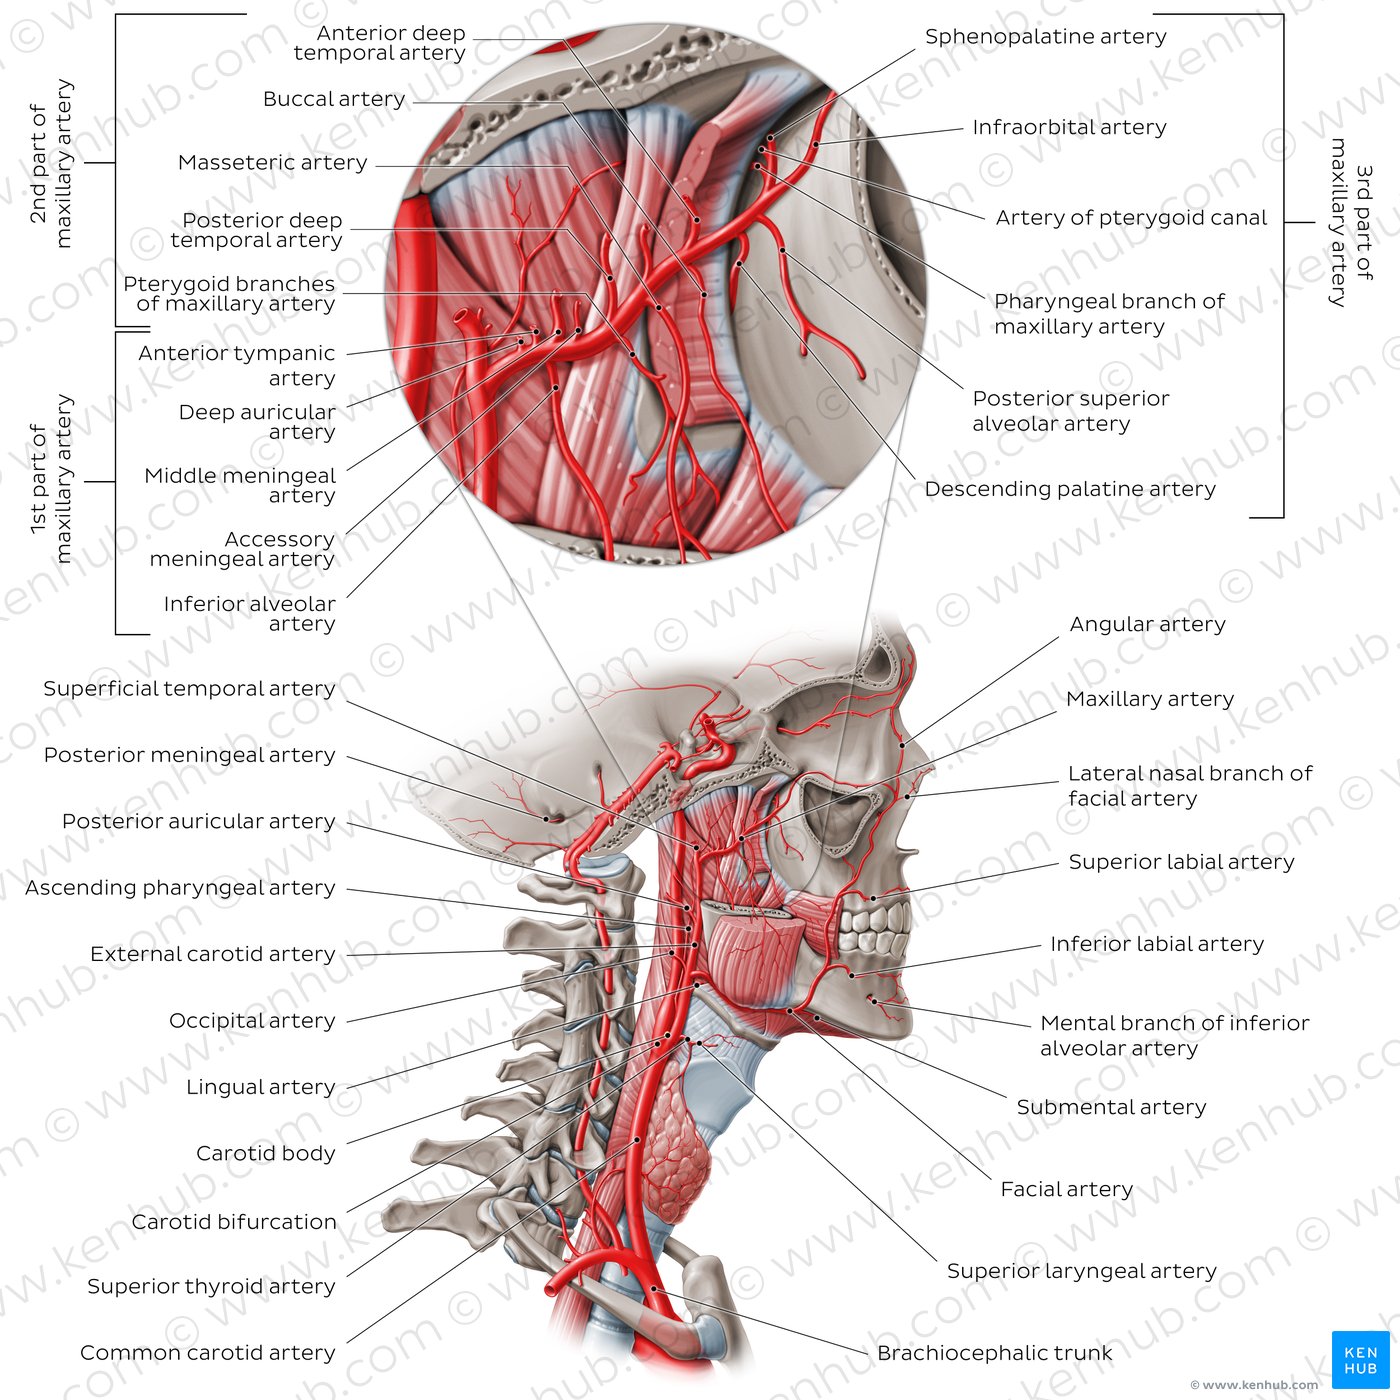 Arteries of the head: External carotid artery